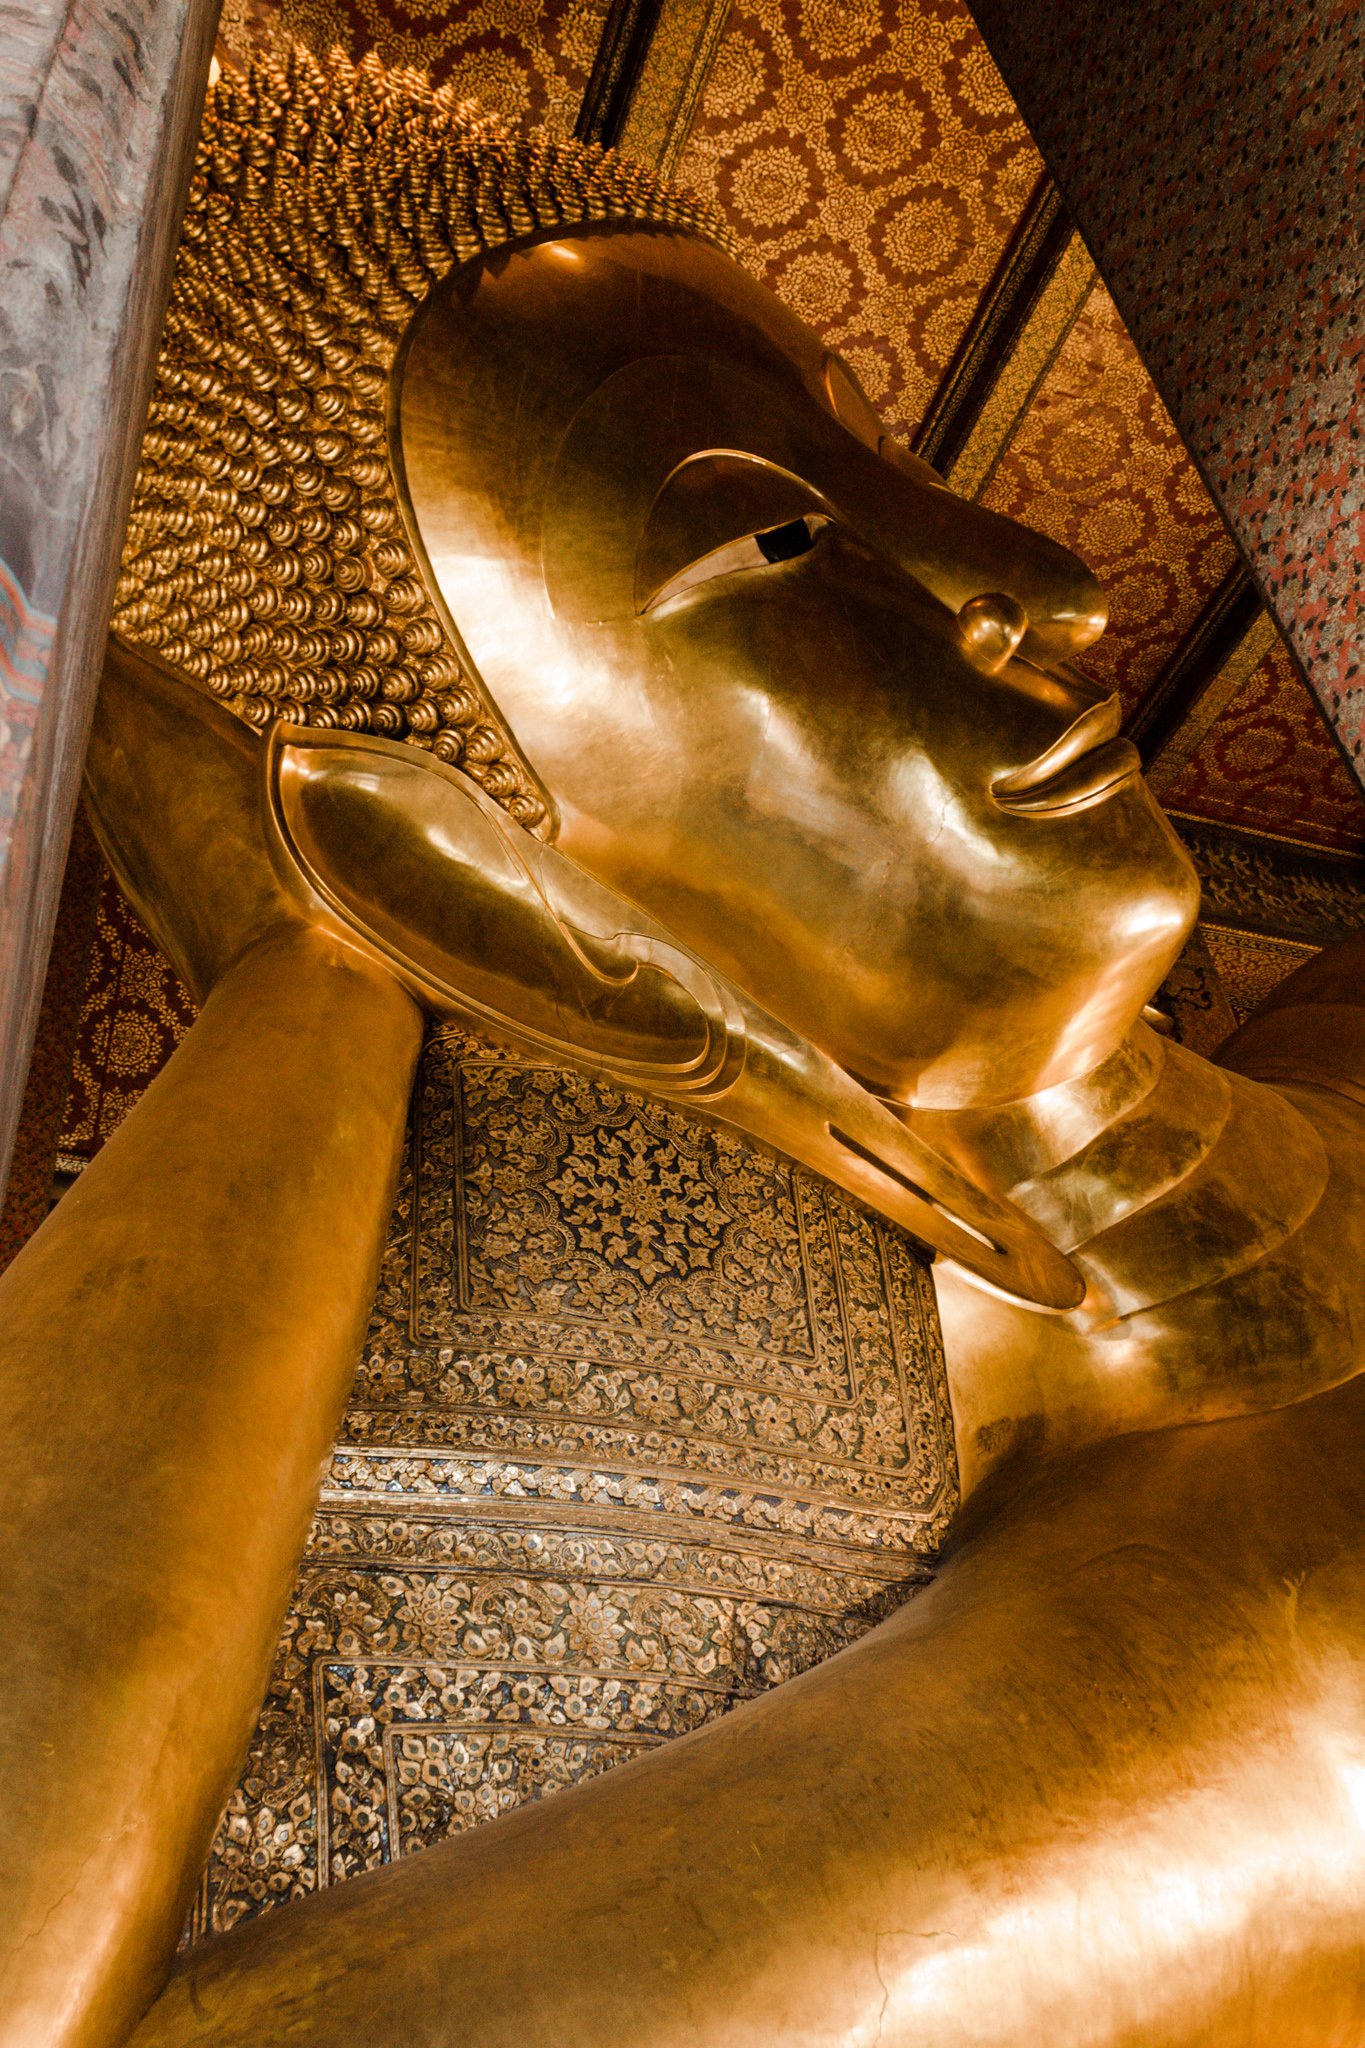 the laying Buddha, Bangkok, Thailand